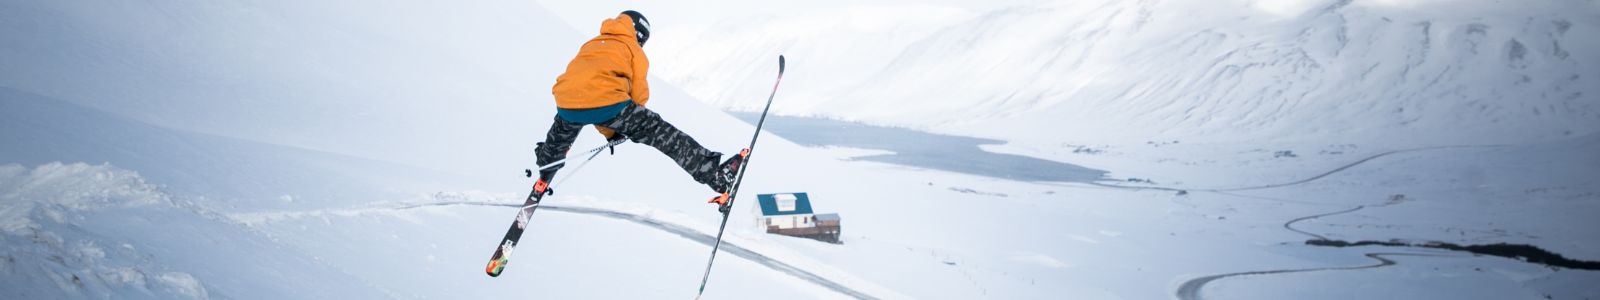 Wintersporten: skiën, snowboarden en langlaufen in IJsland